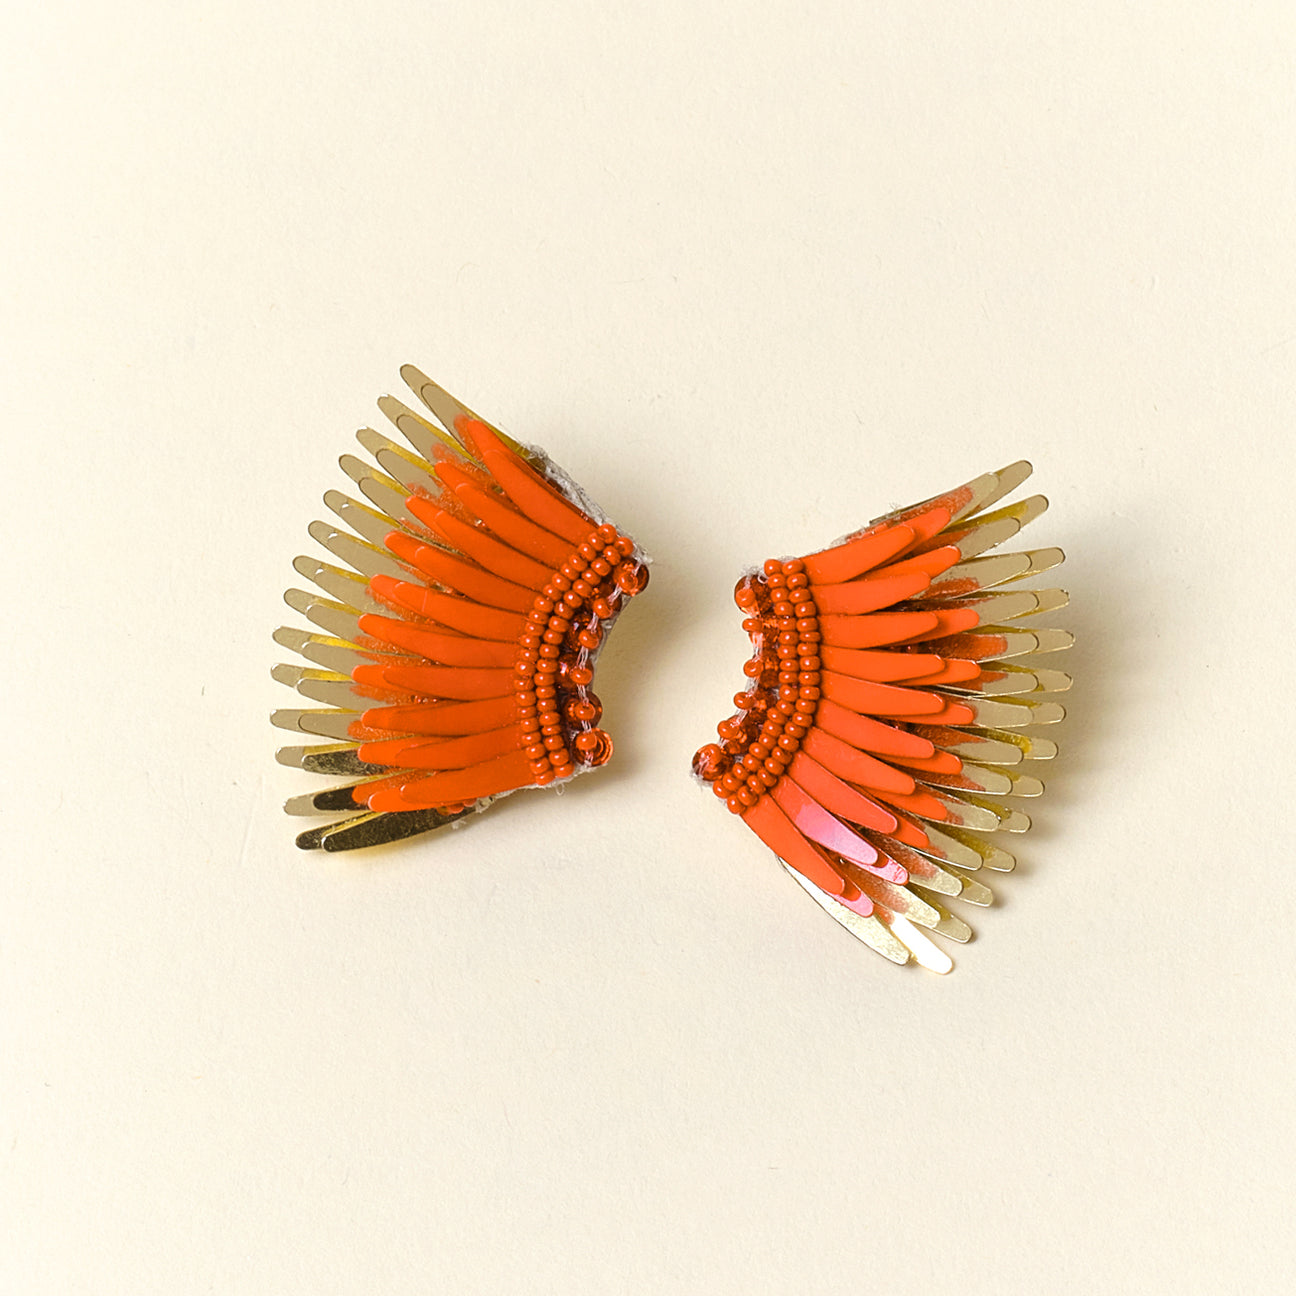 Mini Madeline Earrings In Gold and Orange by Mignonne Gavigan